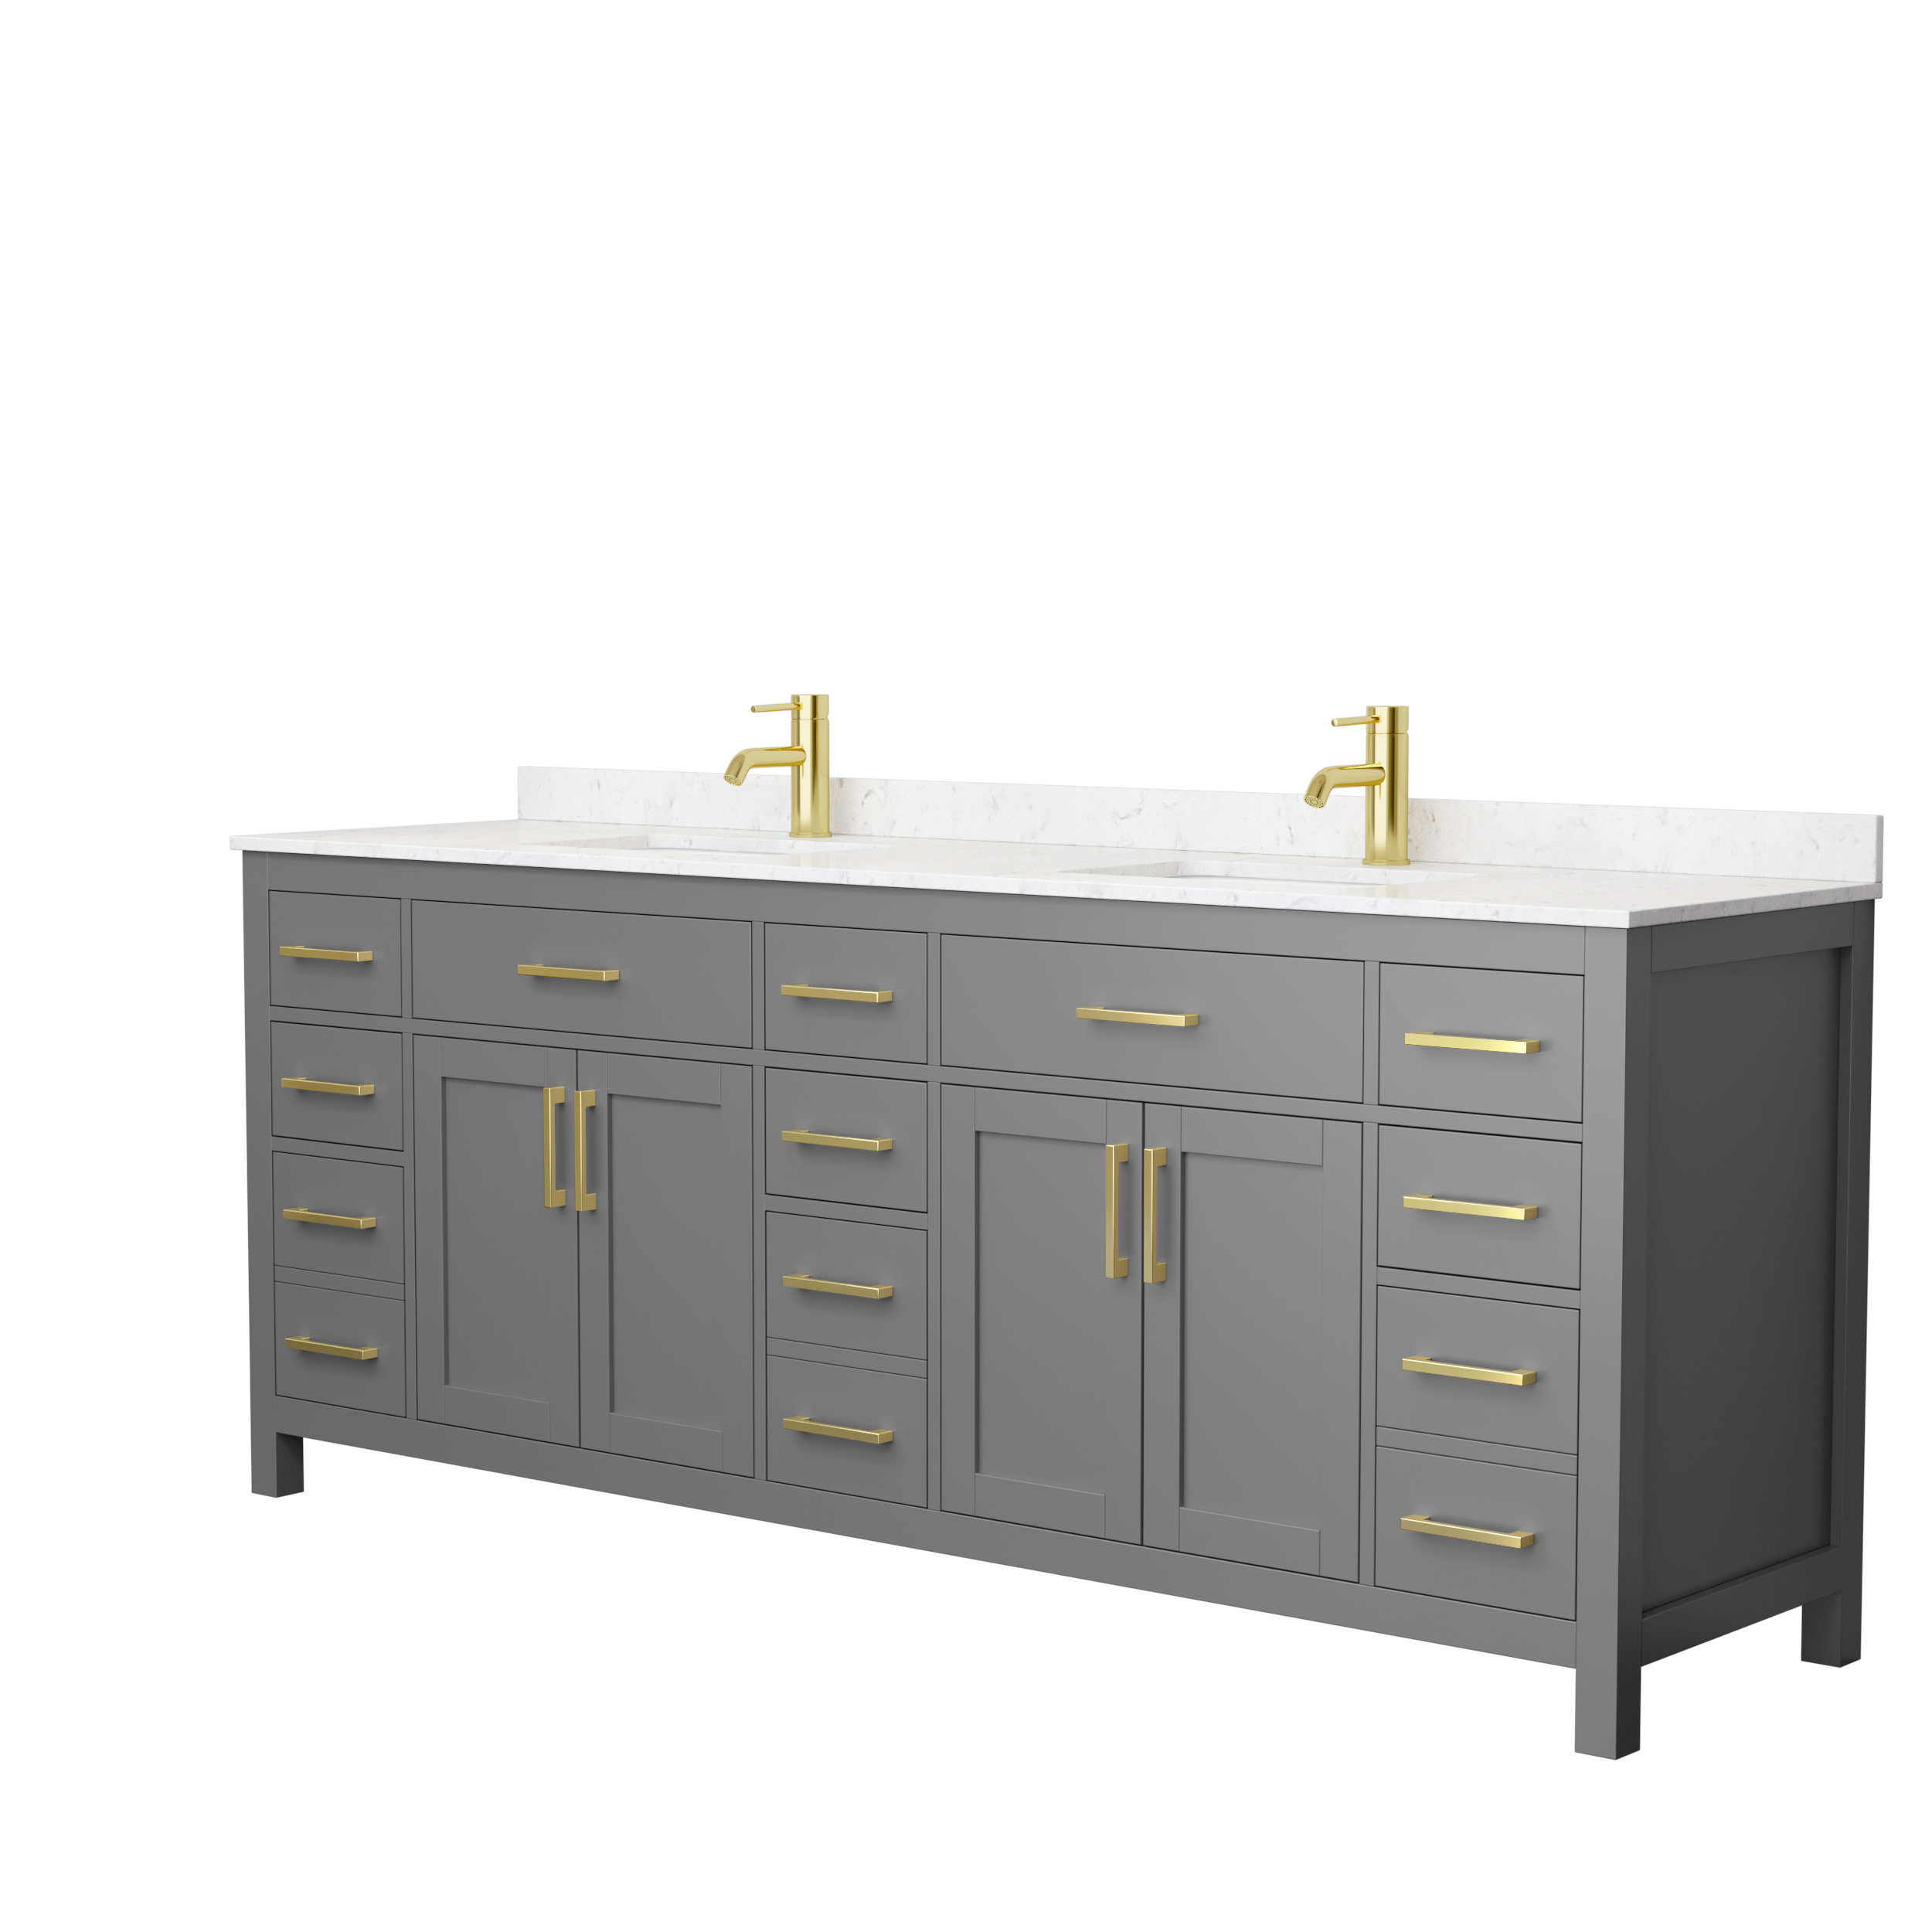 84" Double Bathroom Vanity in Dark Gray, Carrara Cultured Marble Countertop, Undermount Square Sinks, Brushed Gold Trim